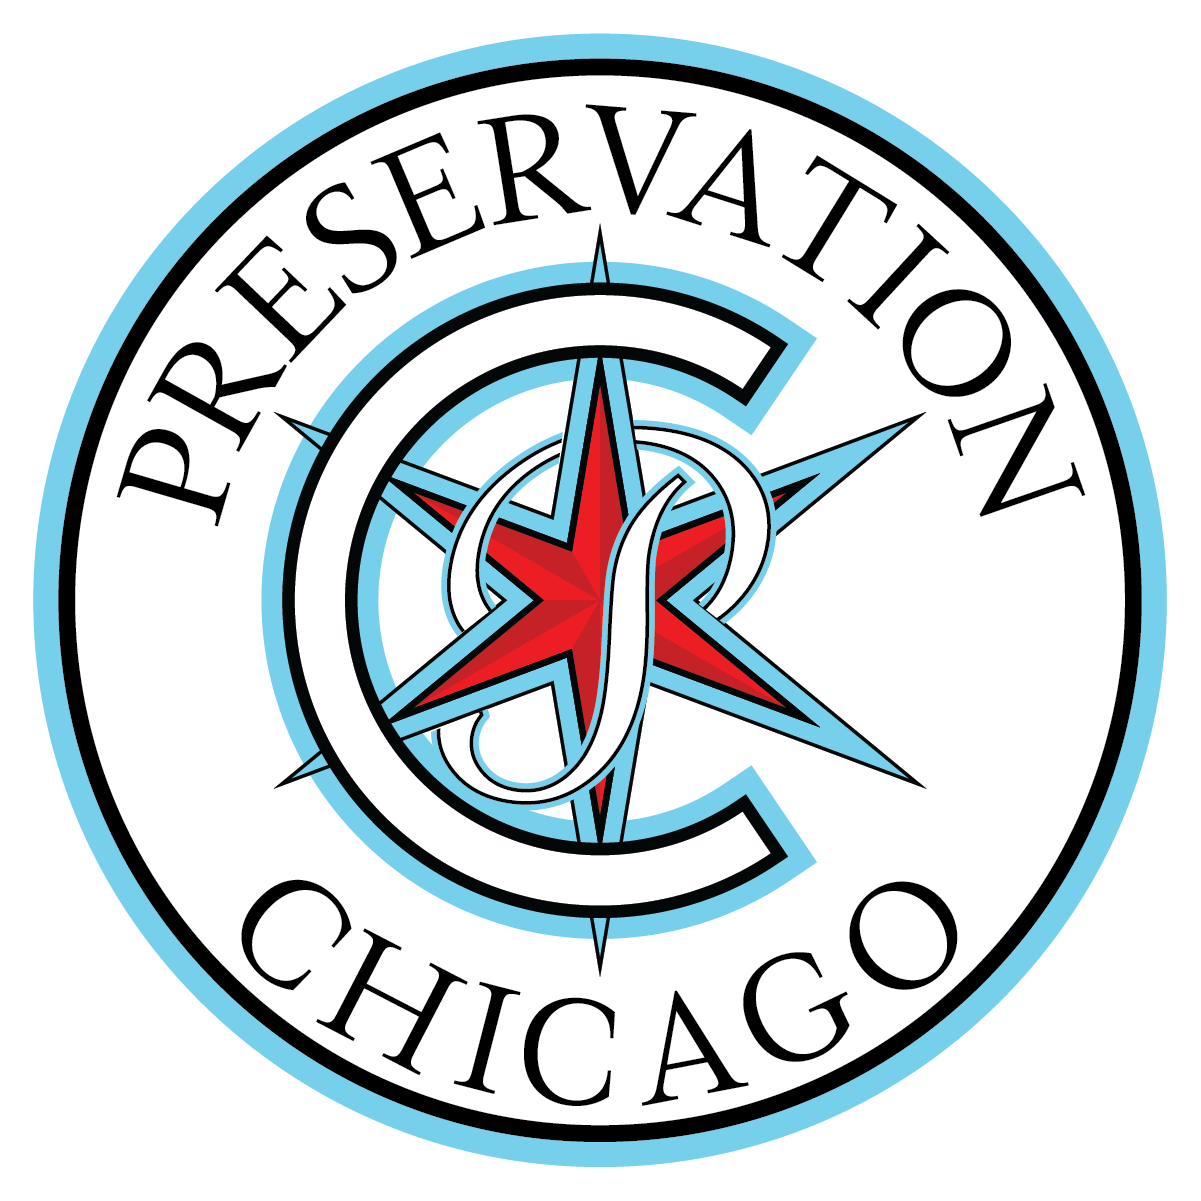 Preservation Chicago (Copy)